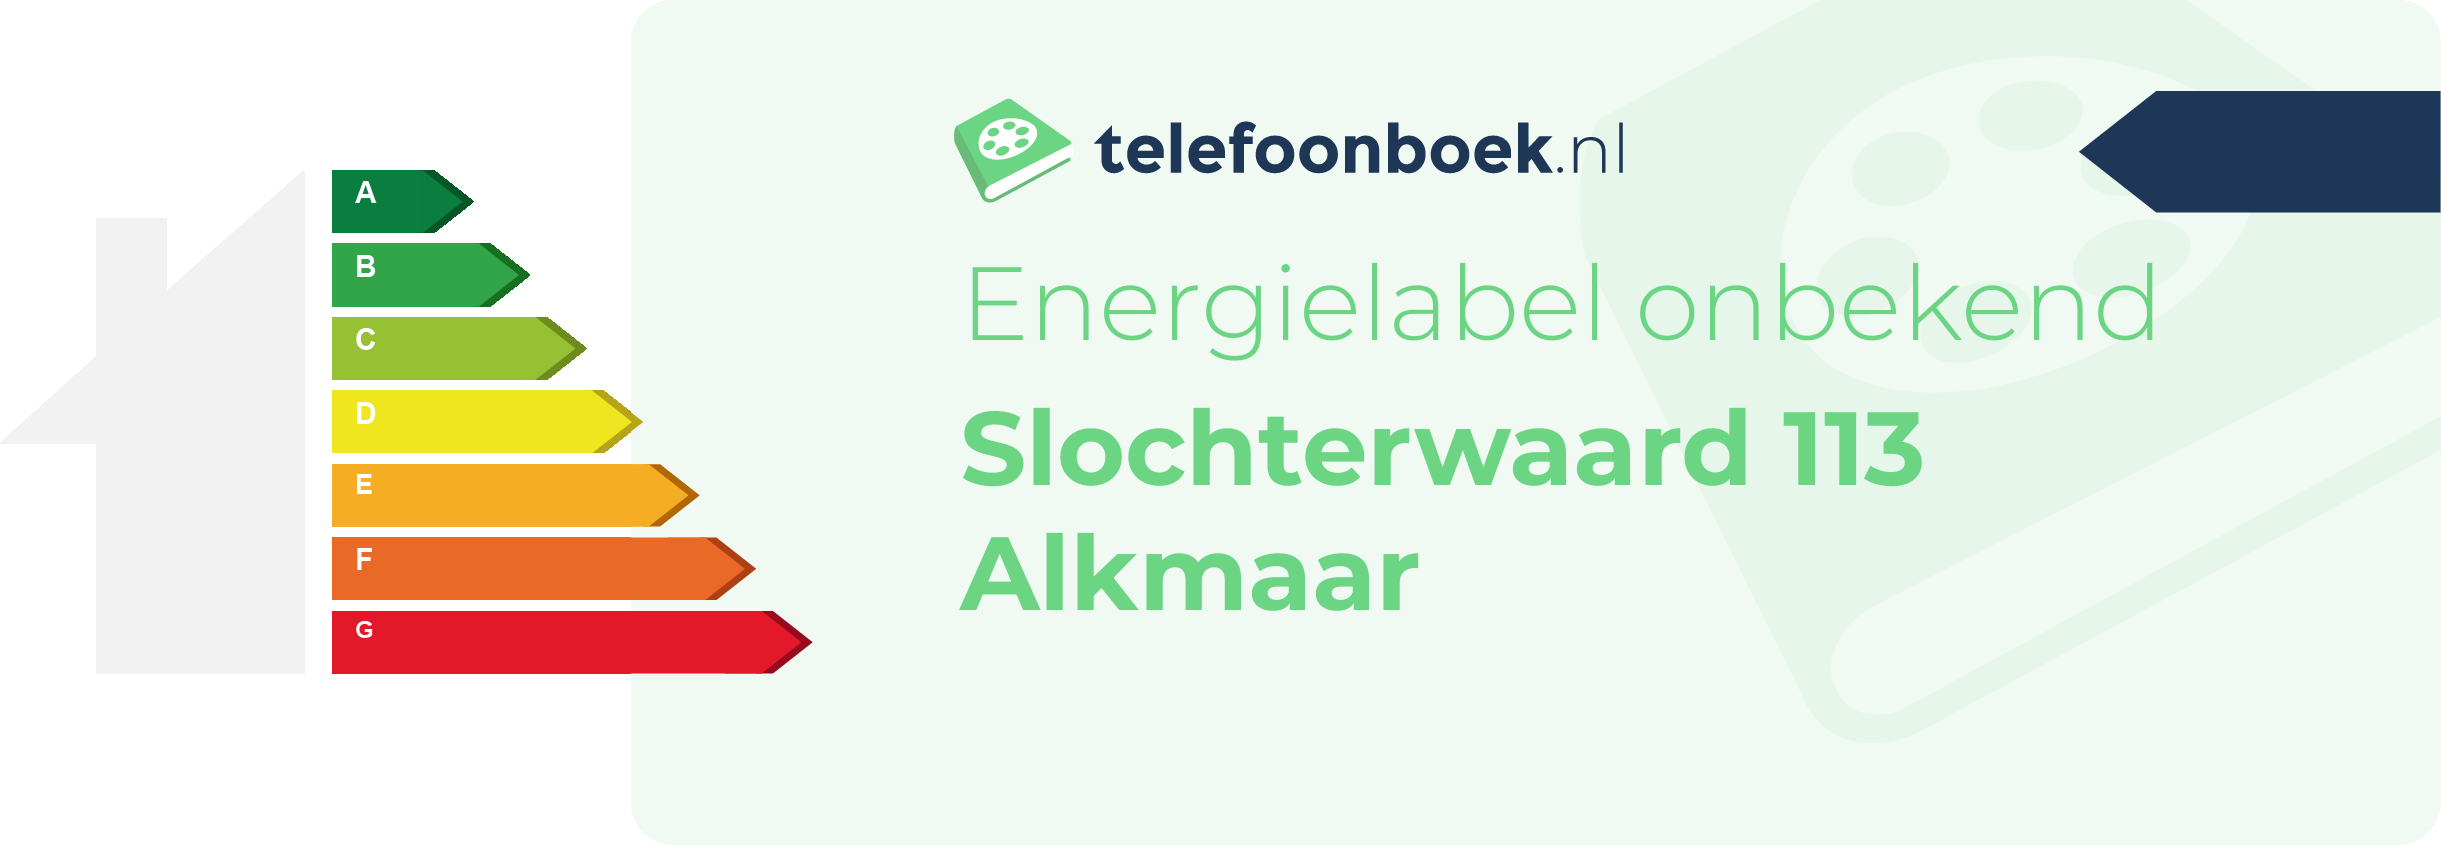 Energielabel Slochterwaard 113 Alkmaar